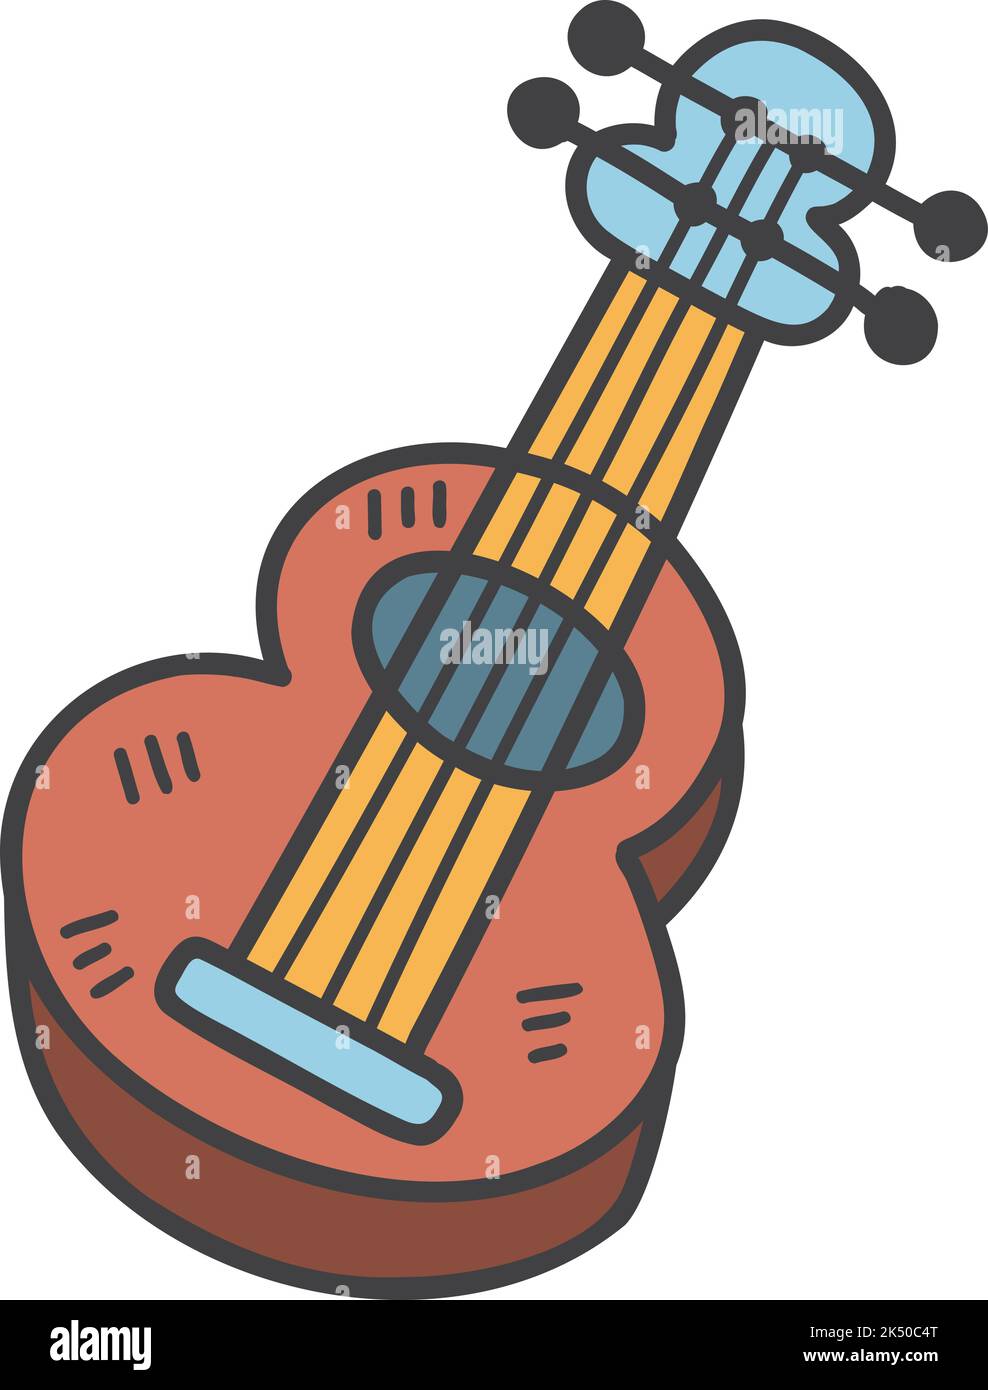 Linda guitarra Imágenes vectoriales de stock - Alamy